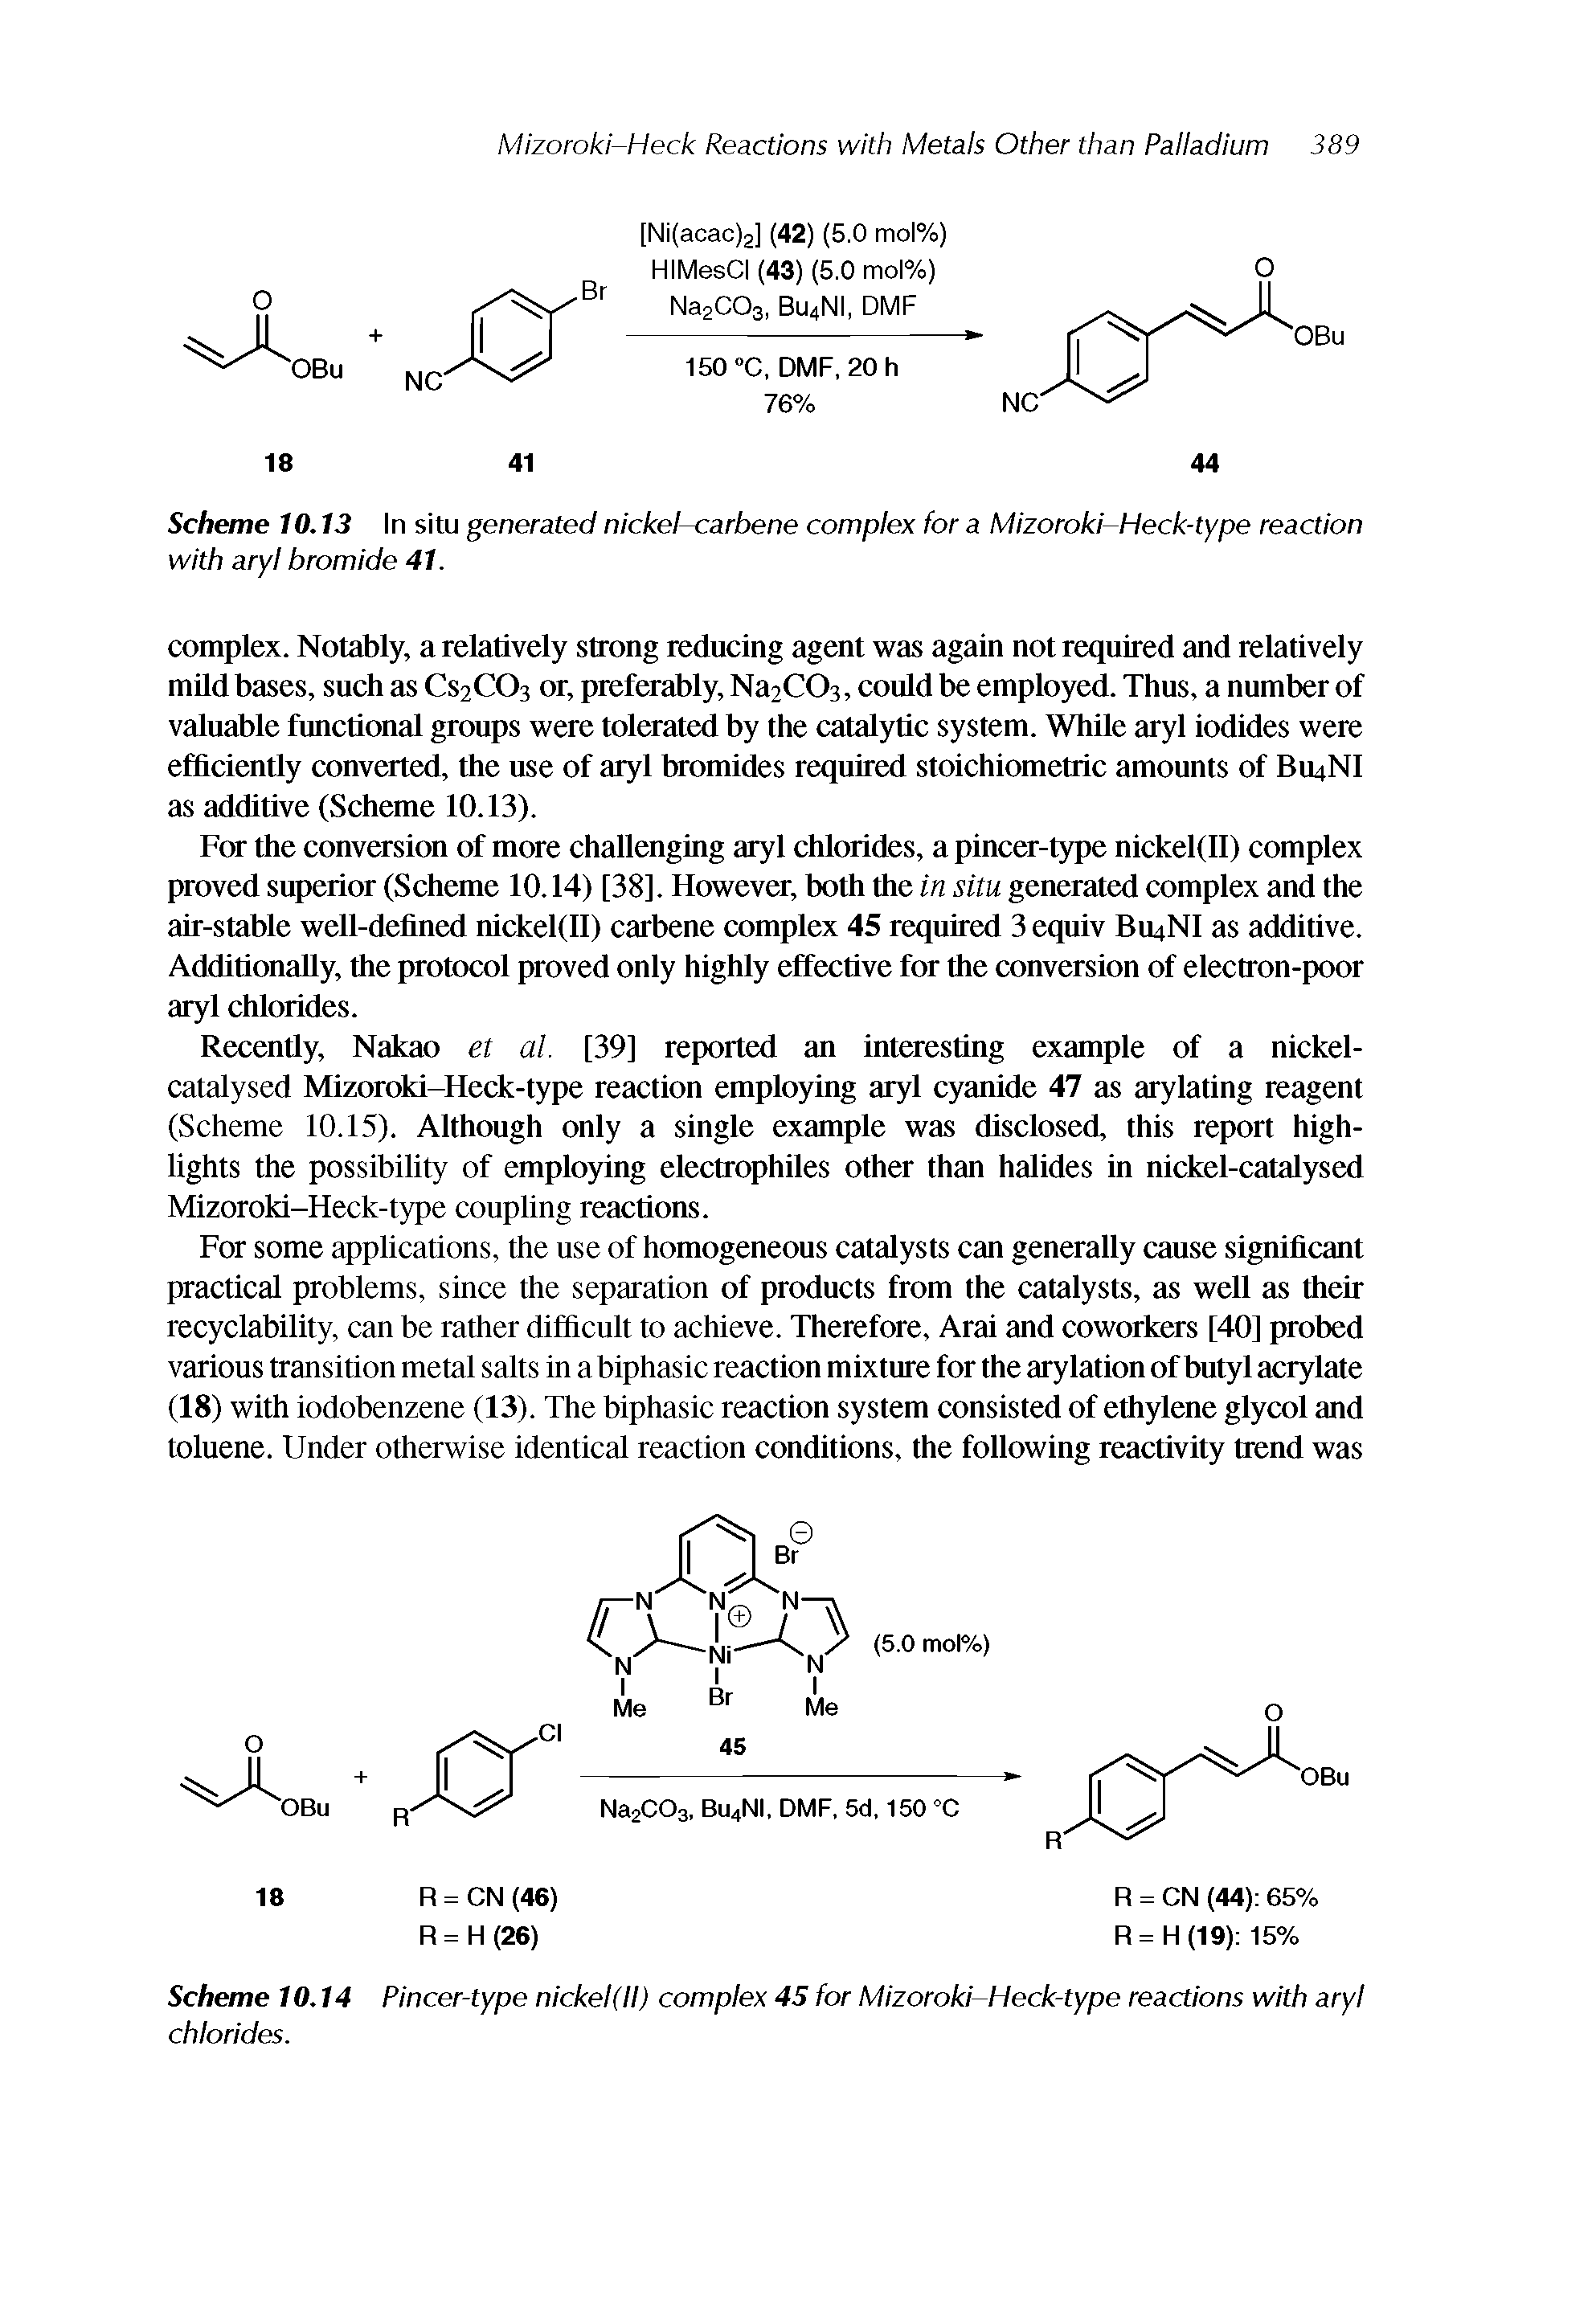 Scheme 10.13 In situ generated nickel arbene complex for a Mizoroki-Heck-type reaction with aryl bromide 41.